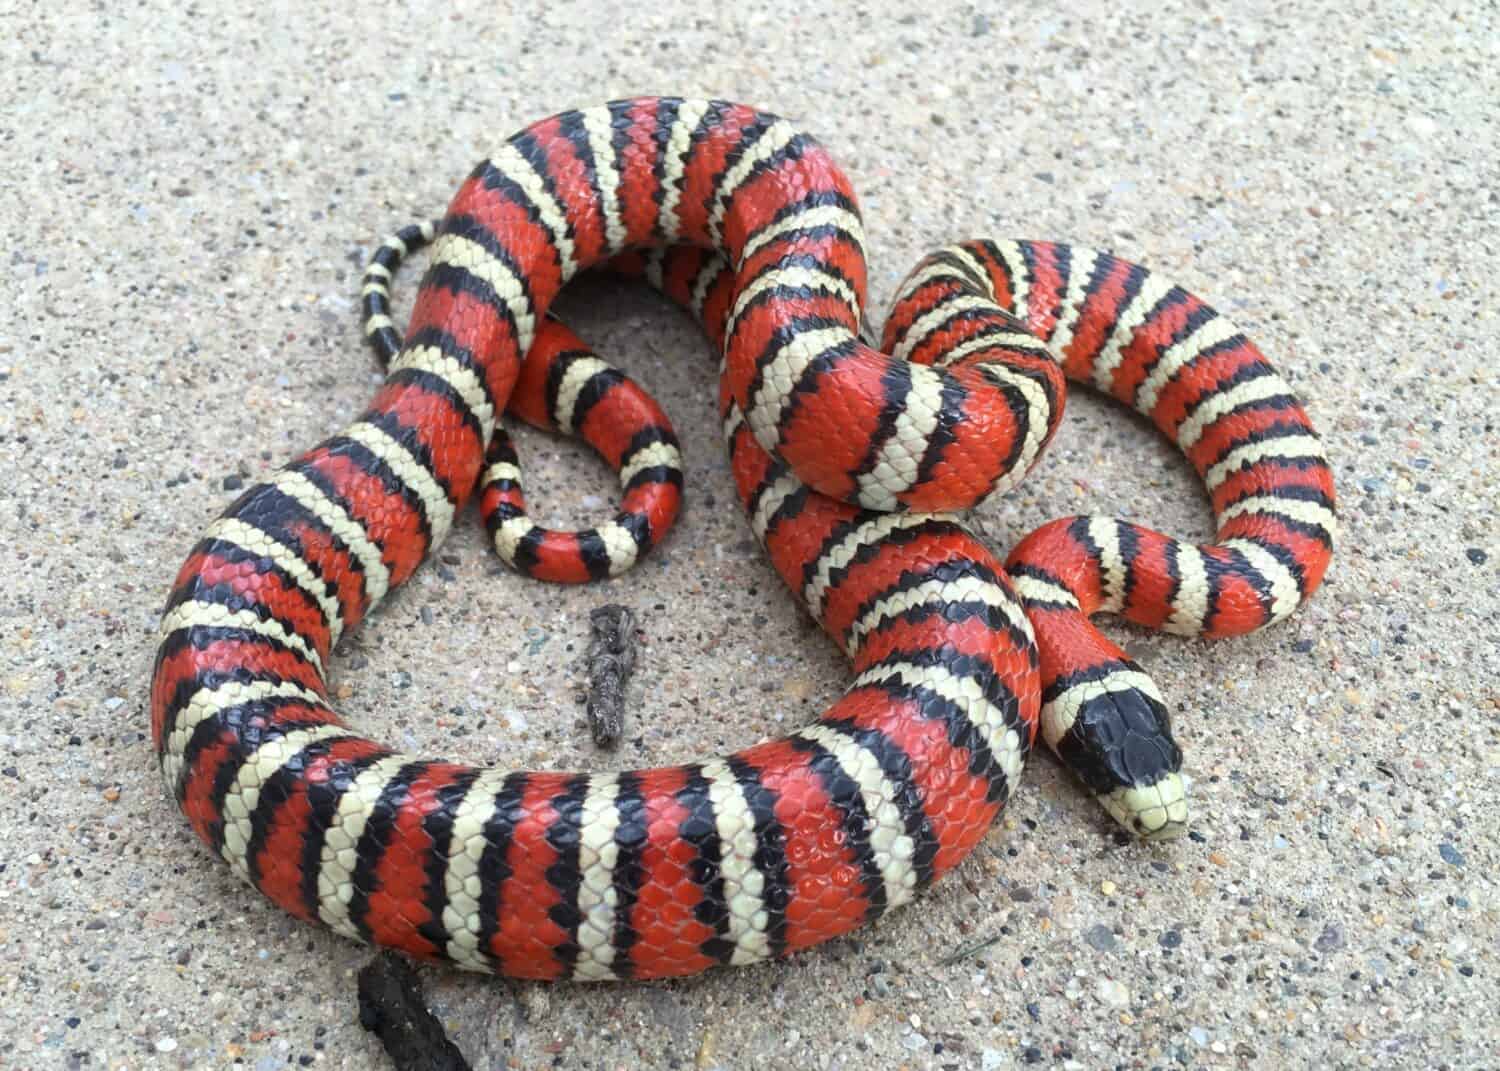 5 Black and White Snakes Arizona - AZ Animals